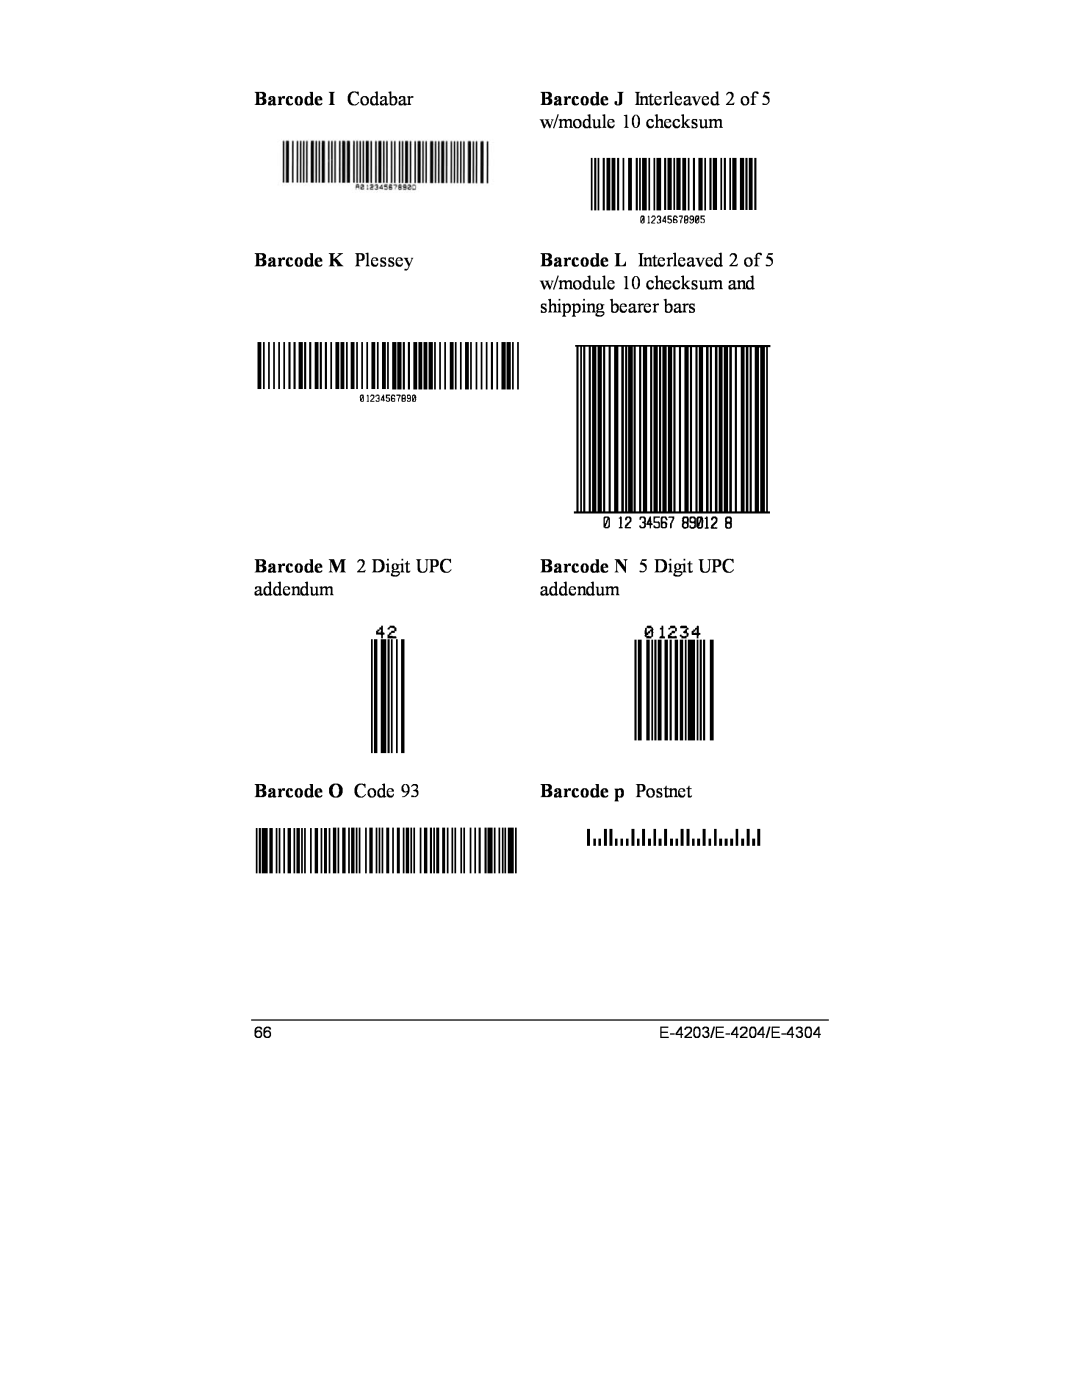 Datamax E-4204, E-4203 Barcode I Codabar, Barcode J Interleaved 2 of, w/module 10 checksum, Barcode K Plessey, addendum 